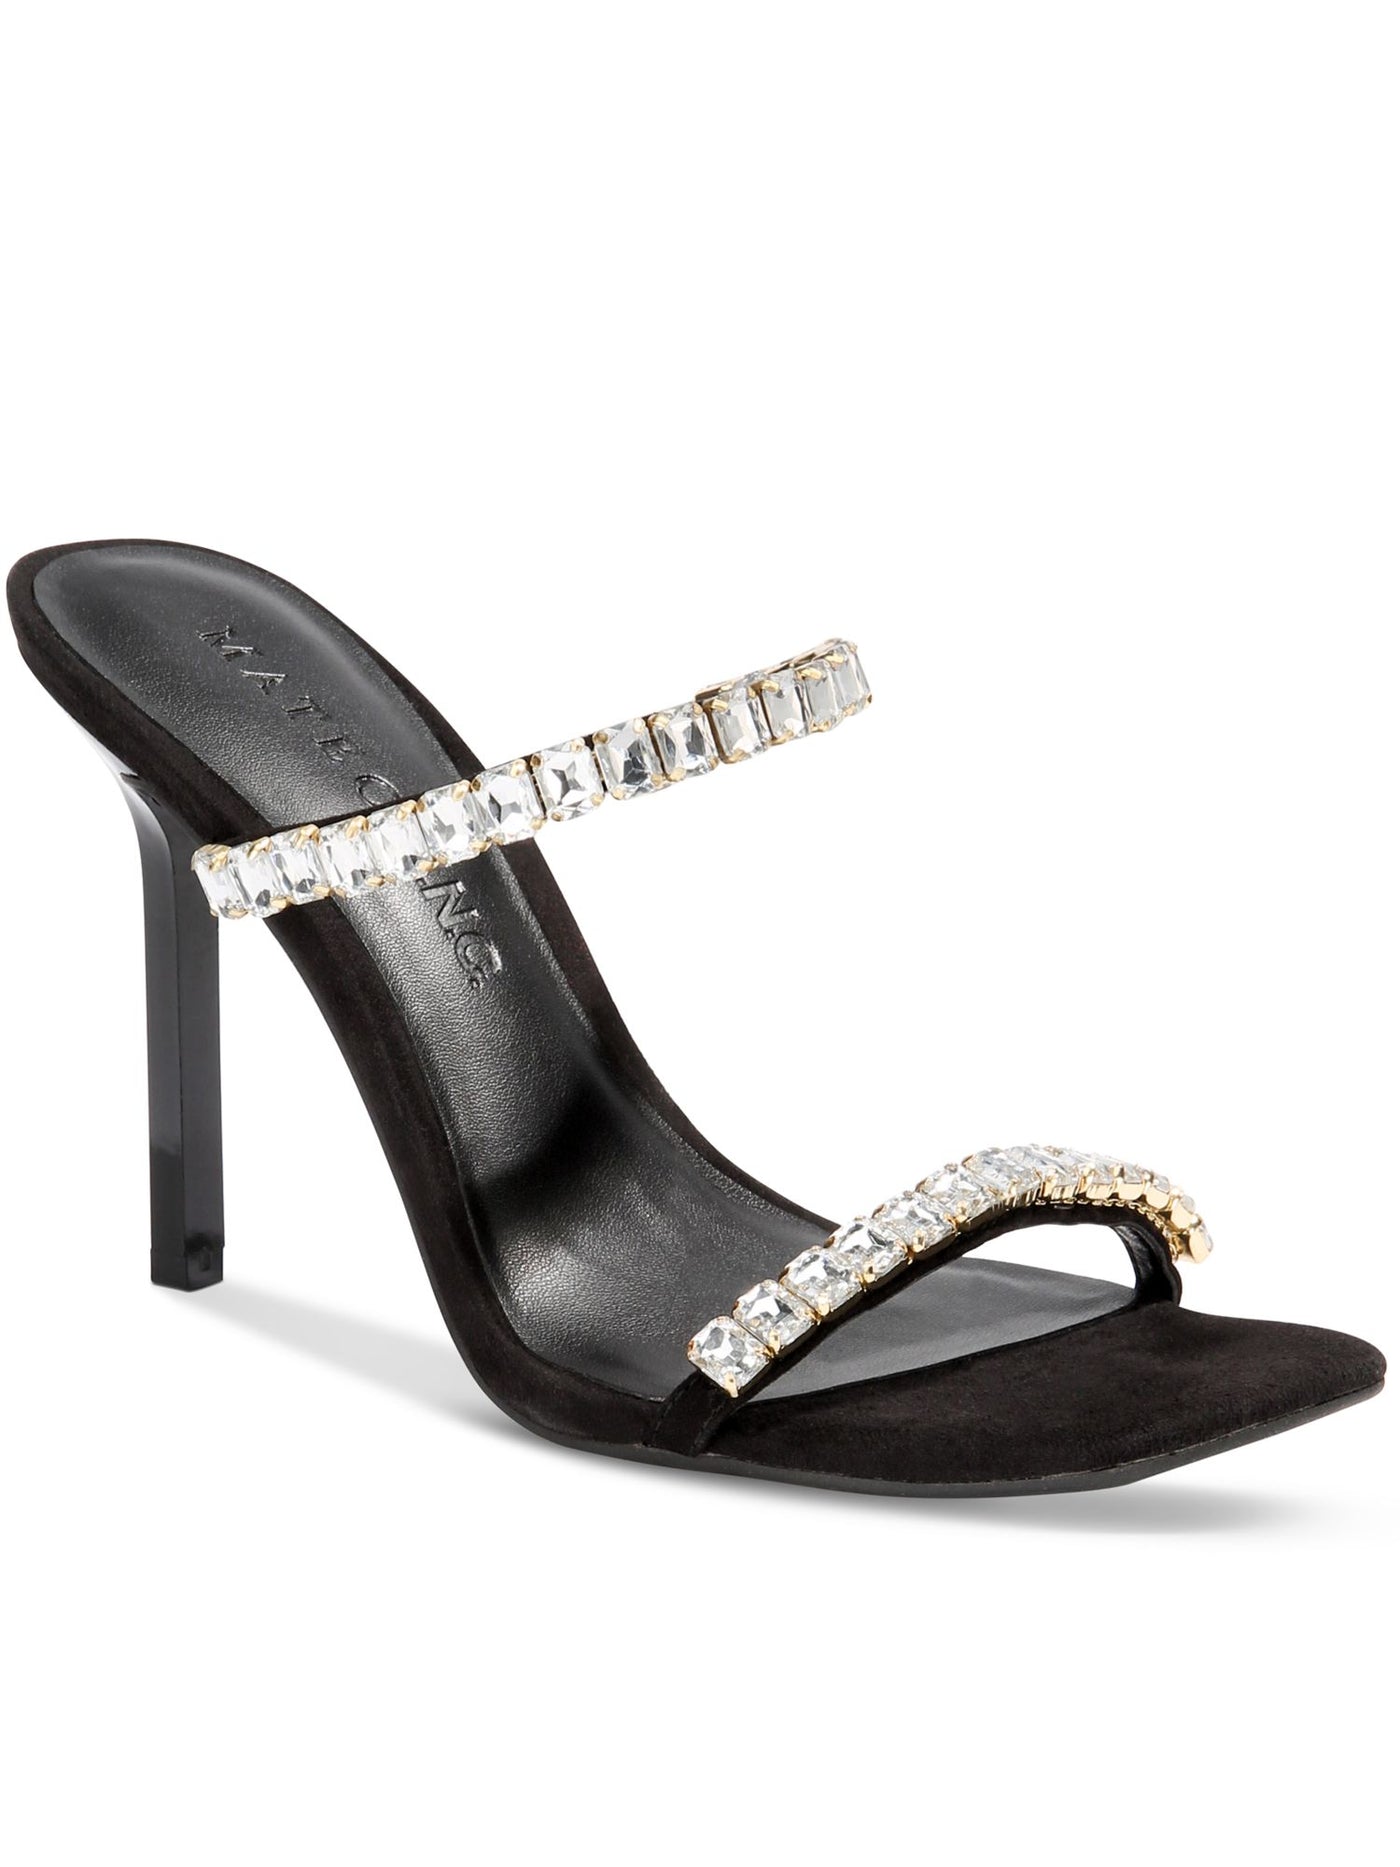 MATEO BY INC Womens Black Embellished Diana Square Toe Stiletto Slip On Dress Heeled Sandal 5 M